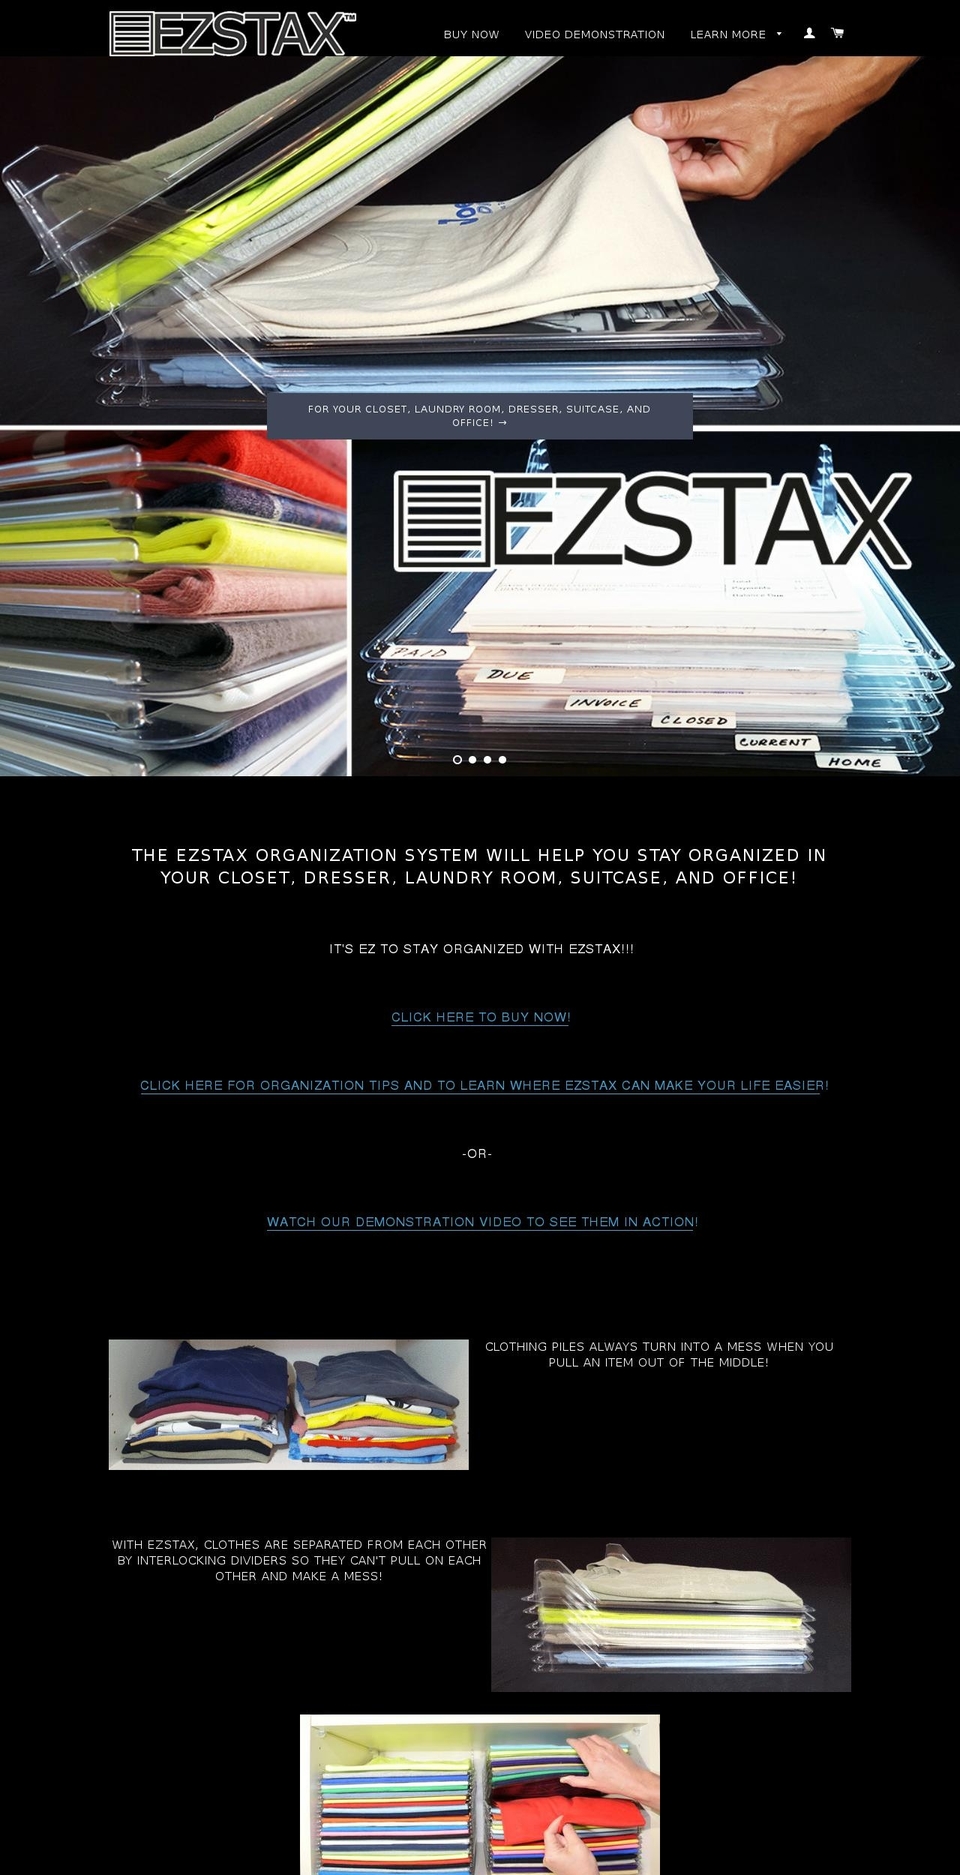 Brooklyn Shopify theme site example ezstax.com